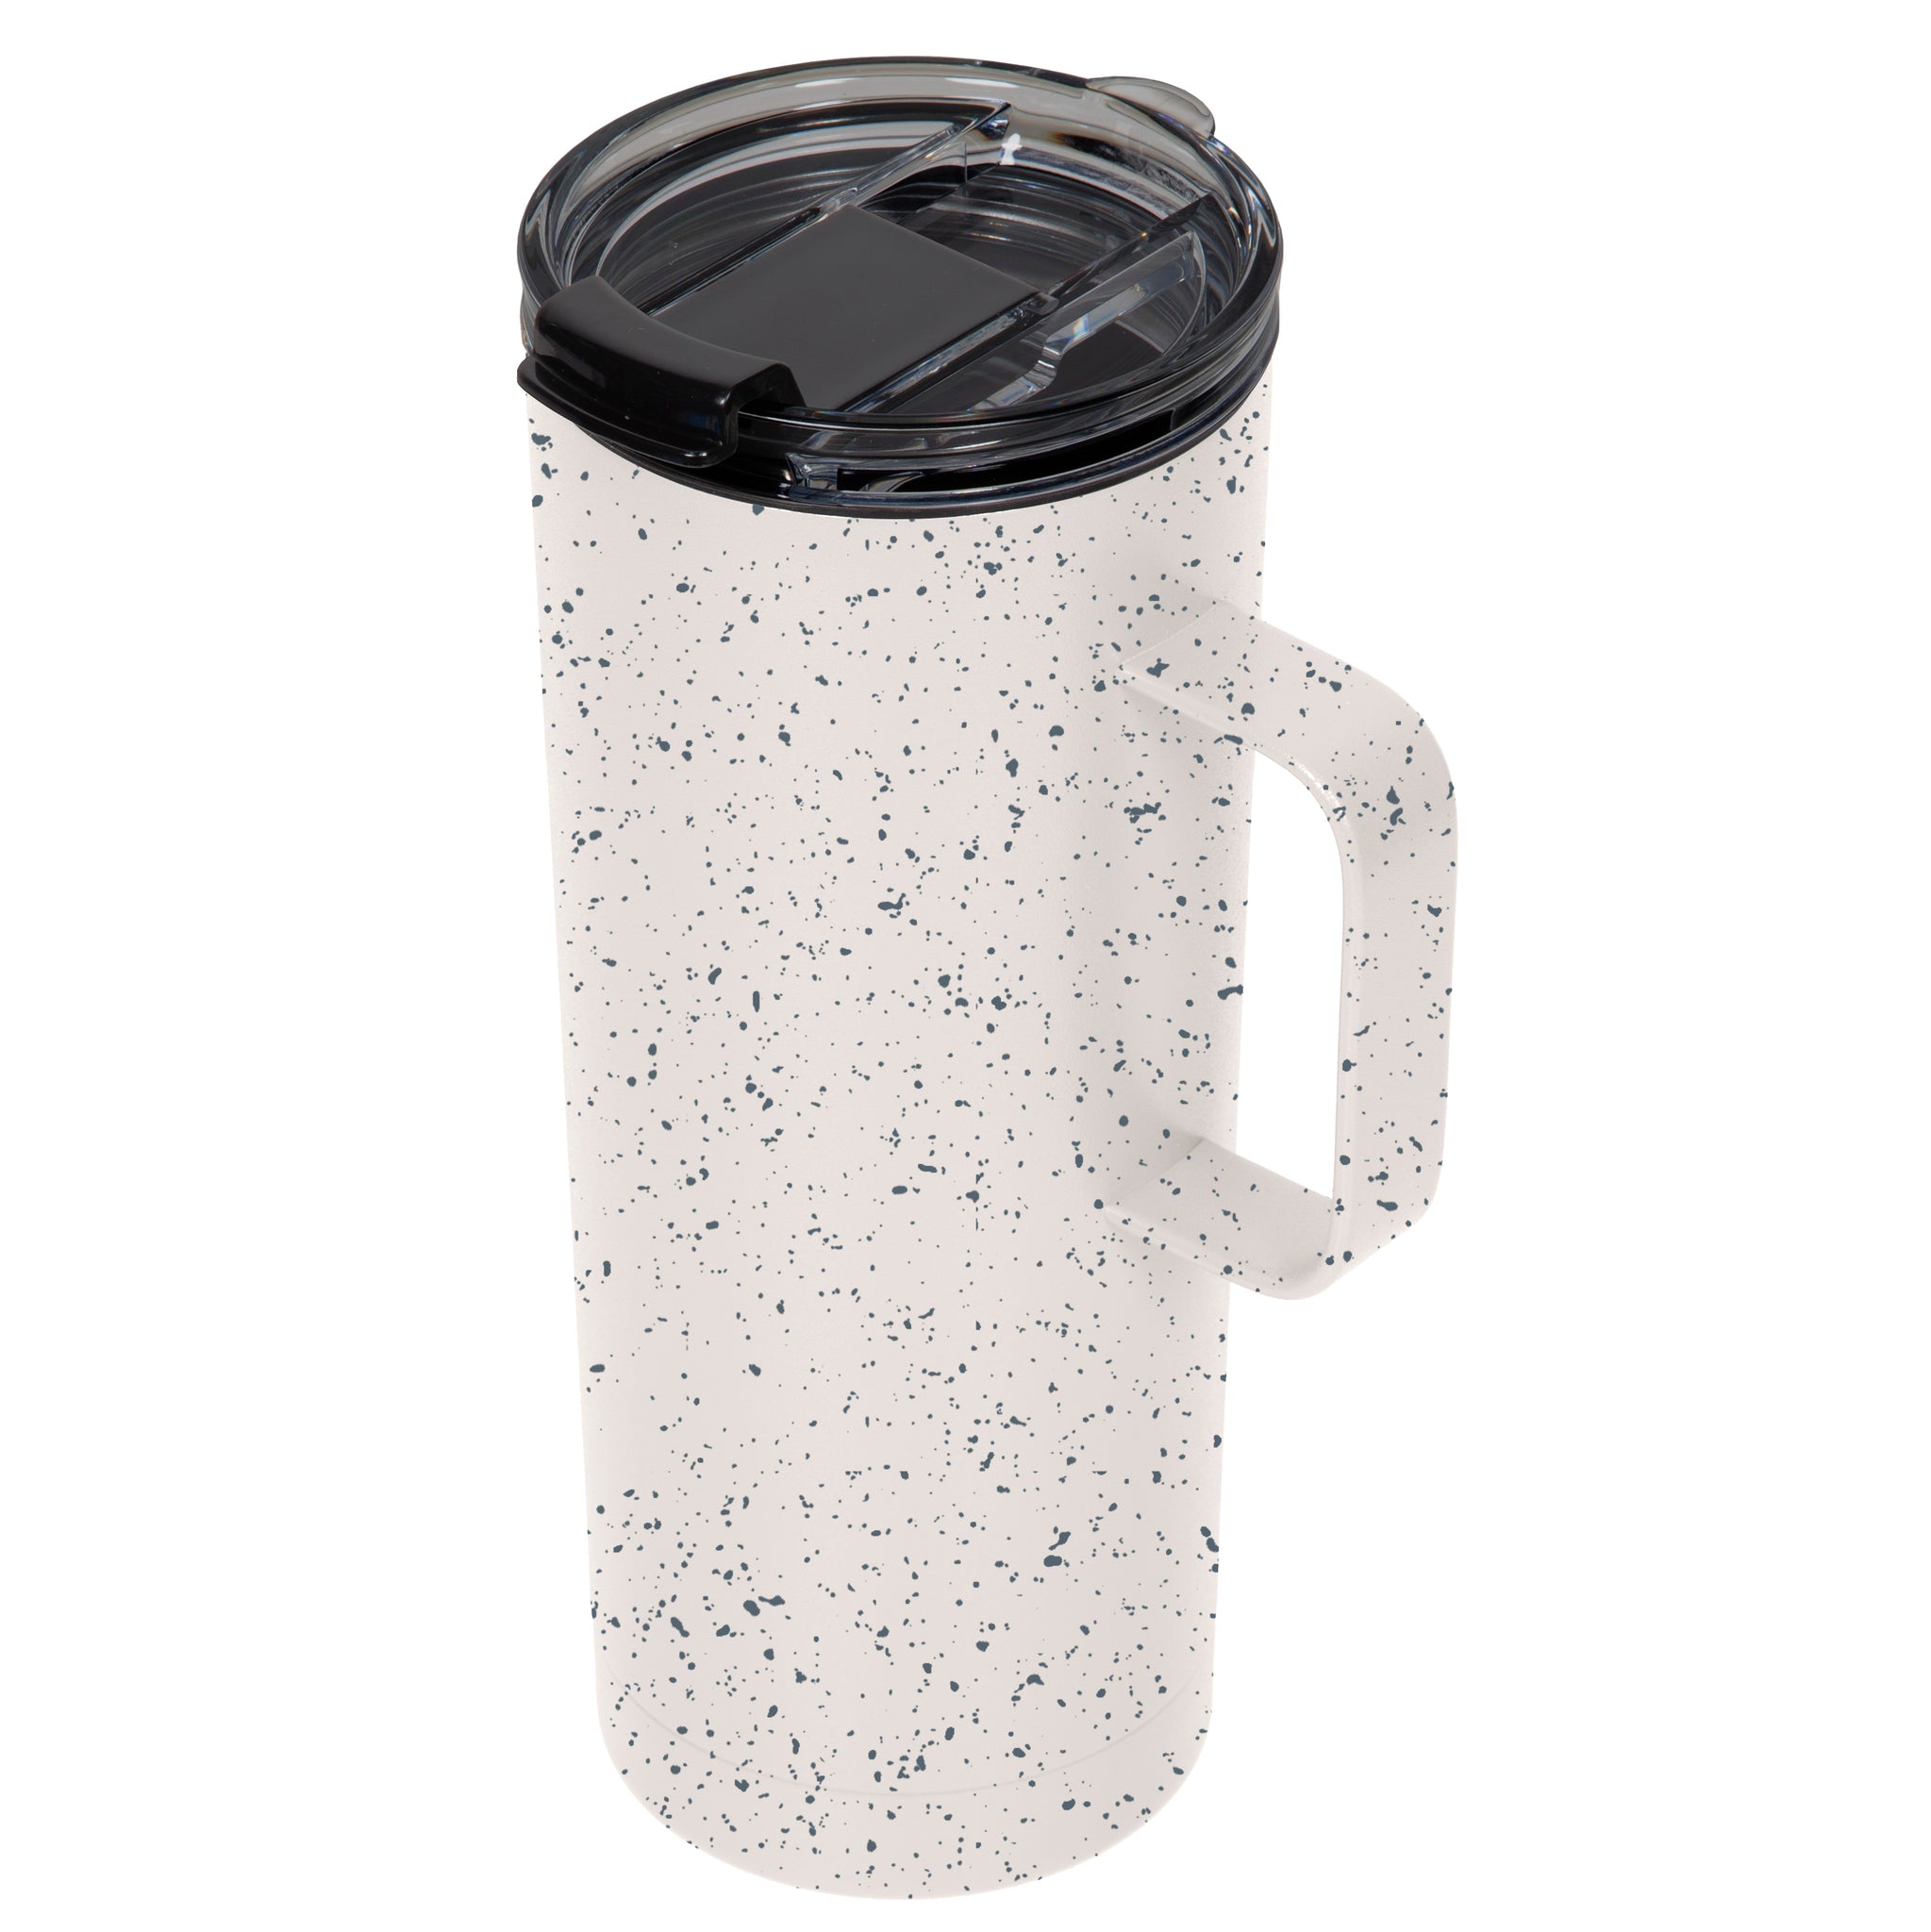 Stainless Steel Coffee Mug 500ml Mug with Lid Beer Mugs for Tea Cup Metal  Cup Drink Straw Travel Cups